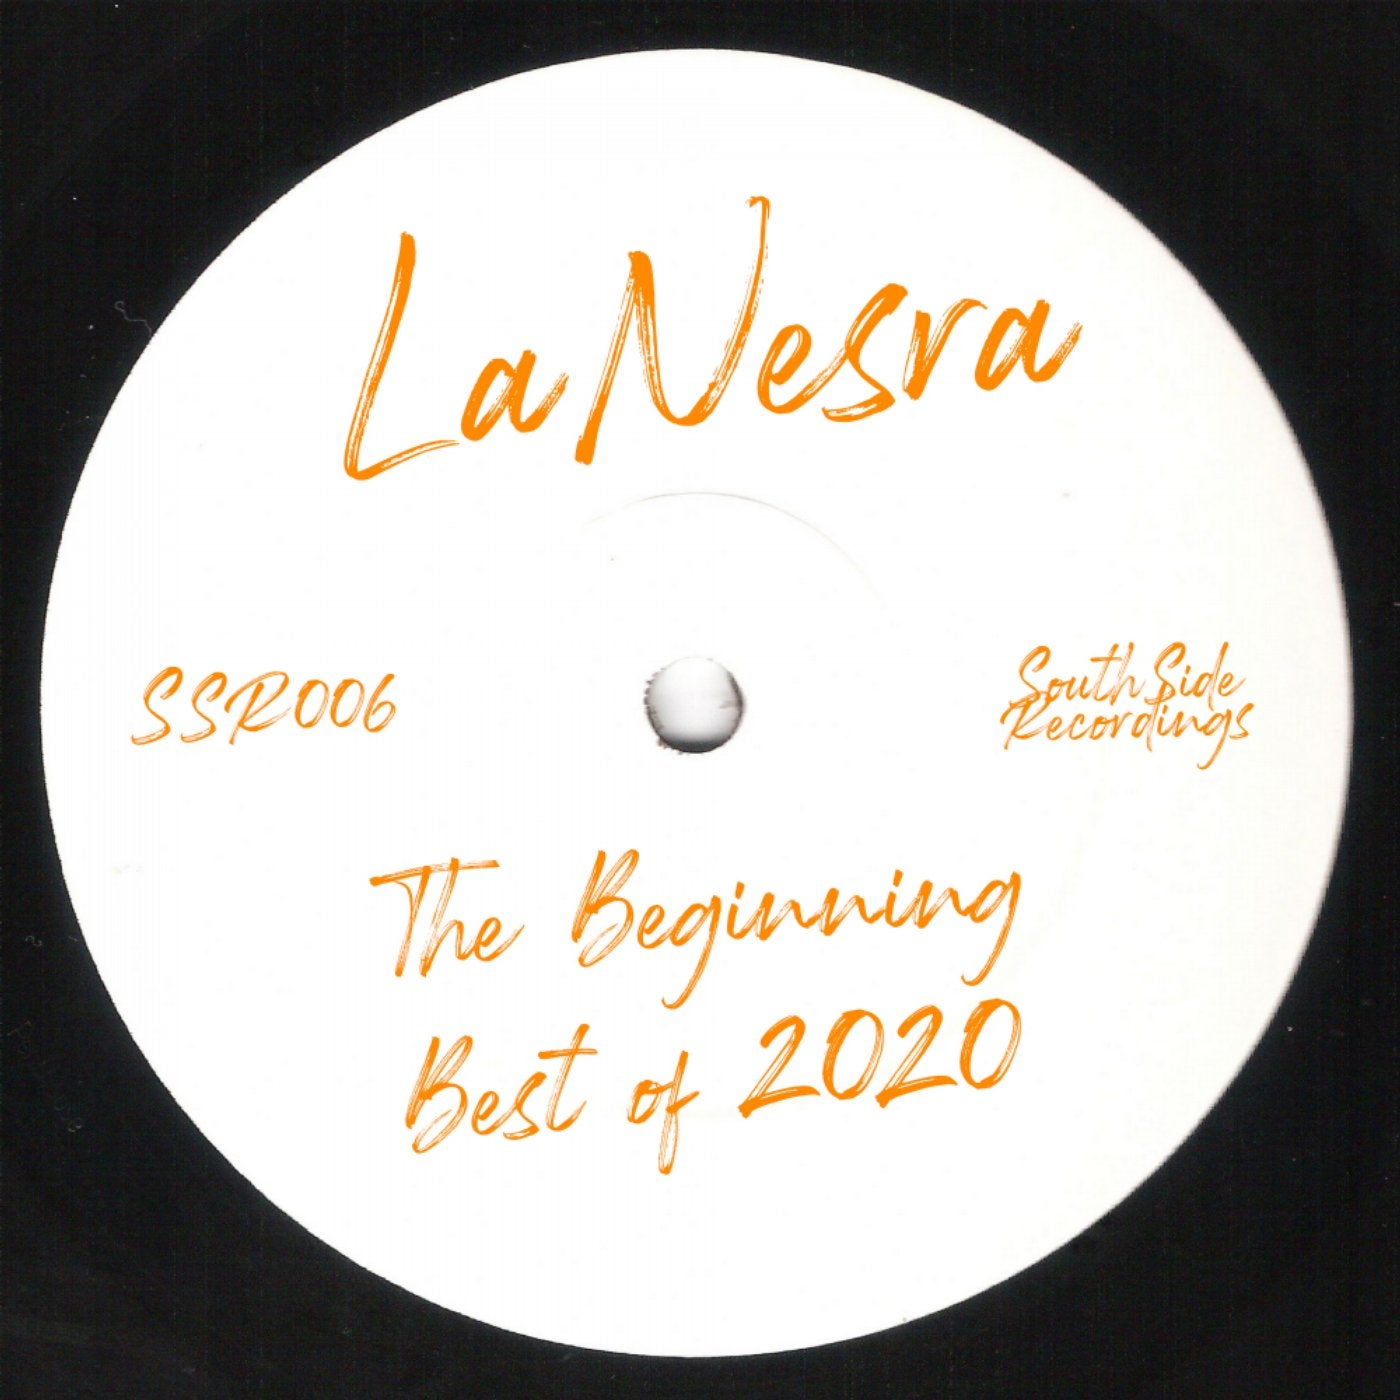 The Beginning (Best of 2020)